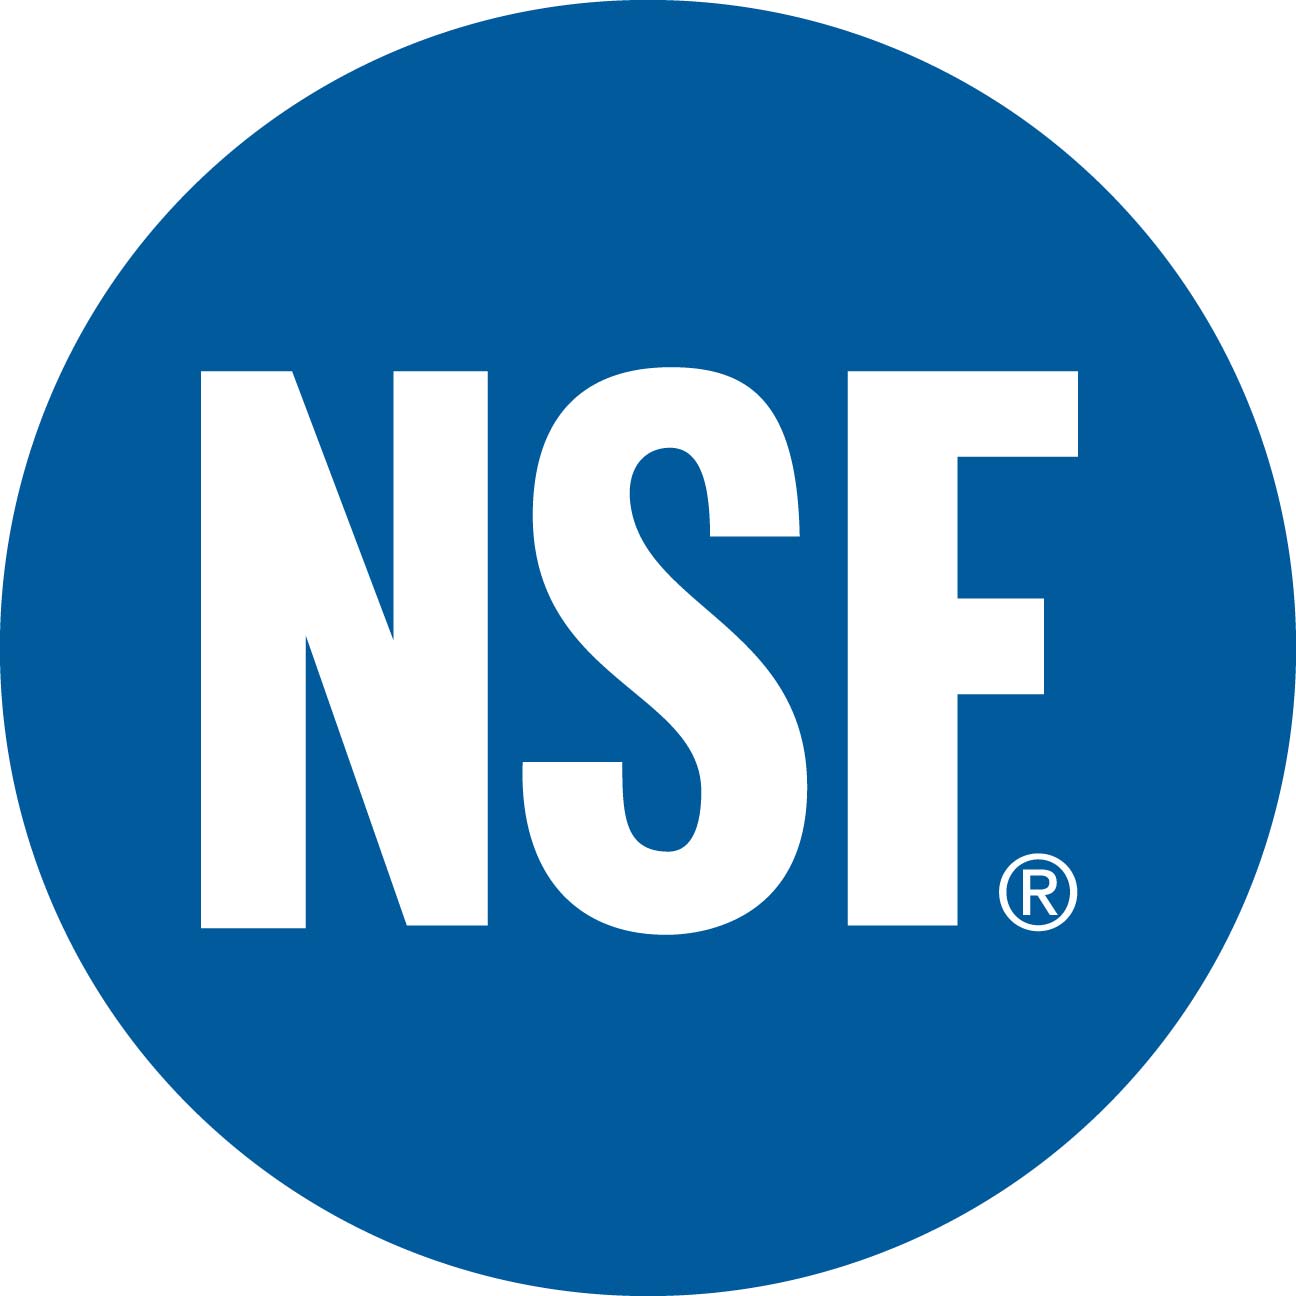 nsf-safety-certification-mark.jpg